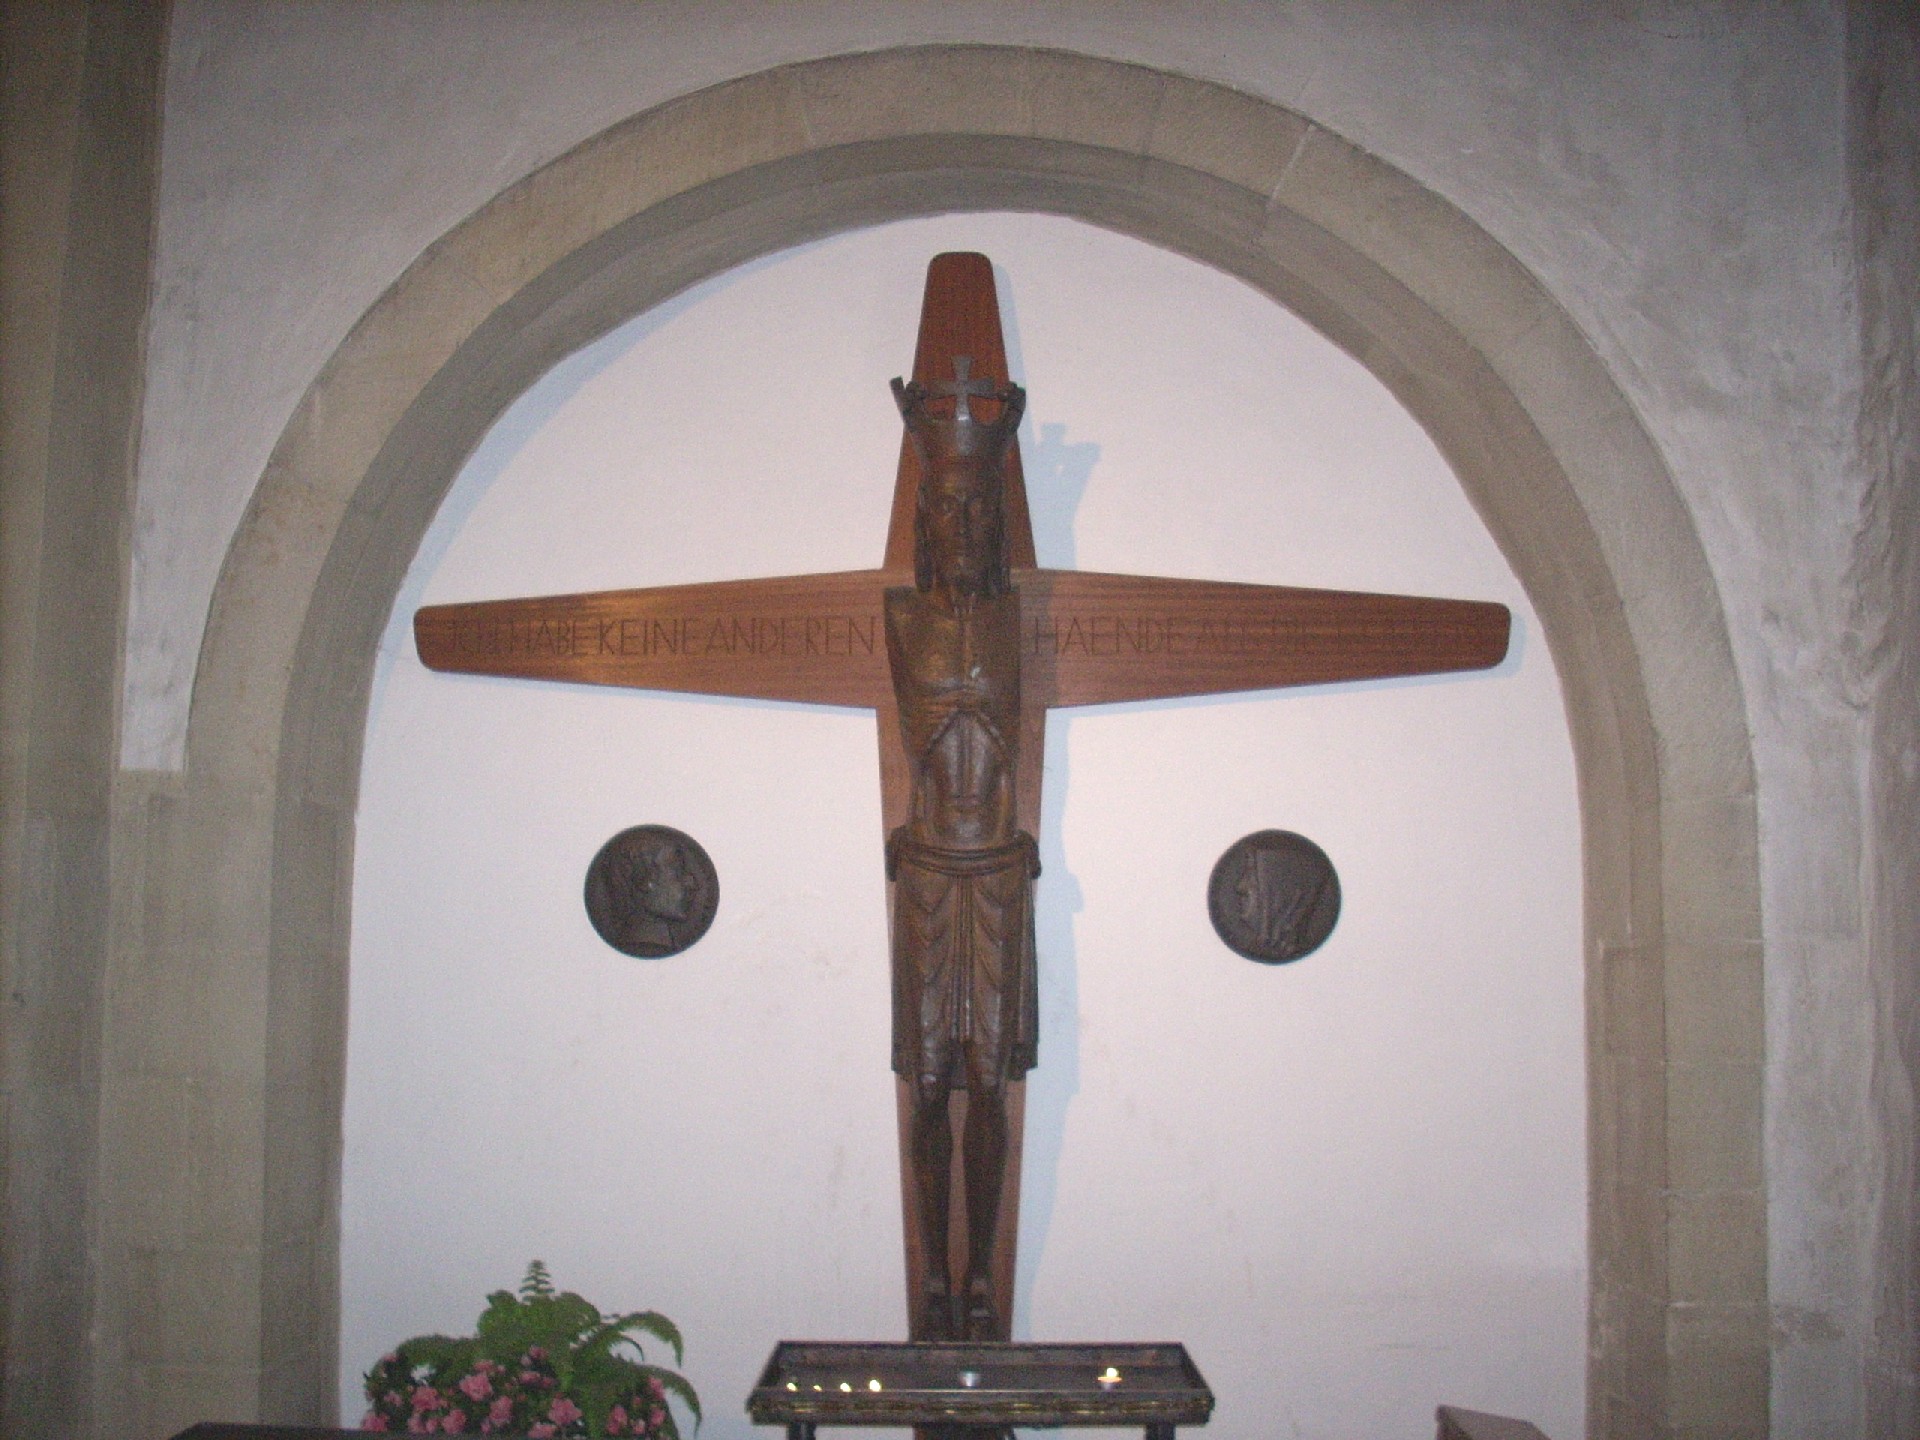 Das Kreuz in St. Ludgeri, Münster. Foto: © Rabanus Flavus / Wikipedia